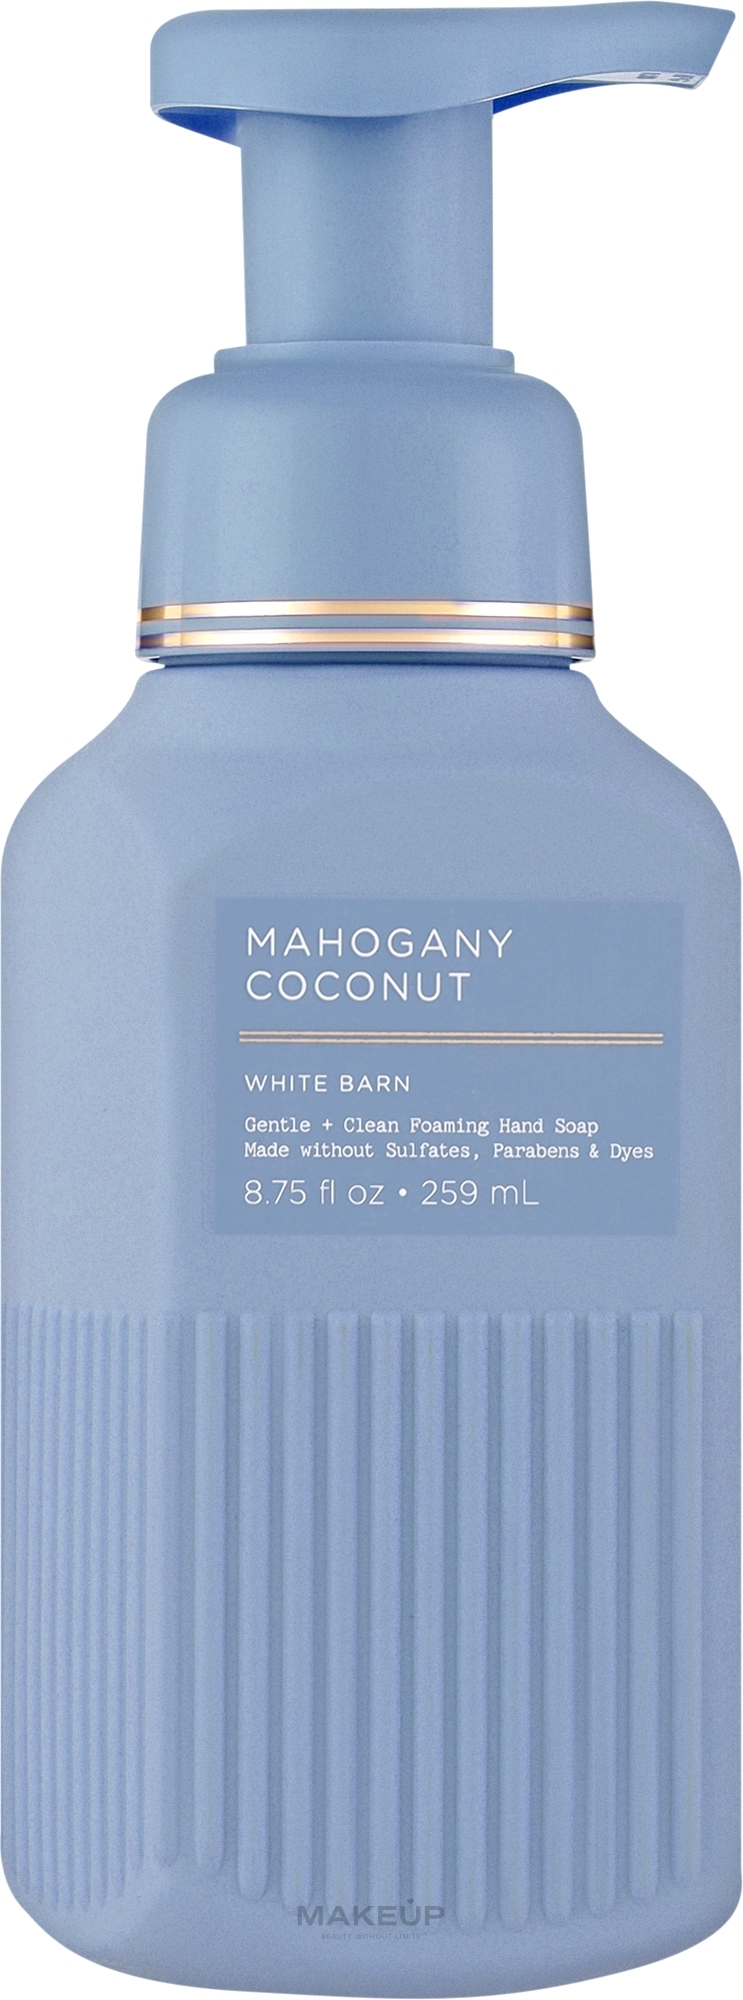 Мило-піна для рук - Bath And Body Works Gentle & Clean Foaming Hand Soap Mahogany Coconut — фото 259ml